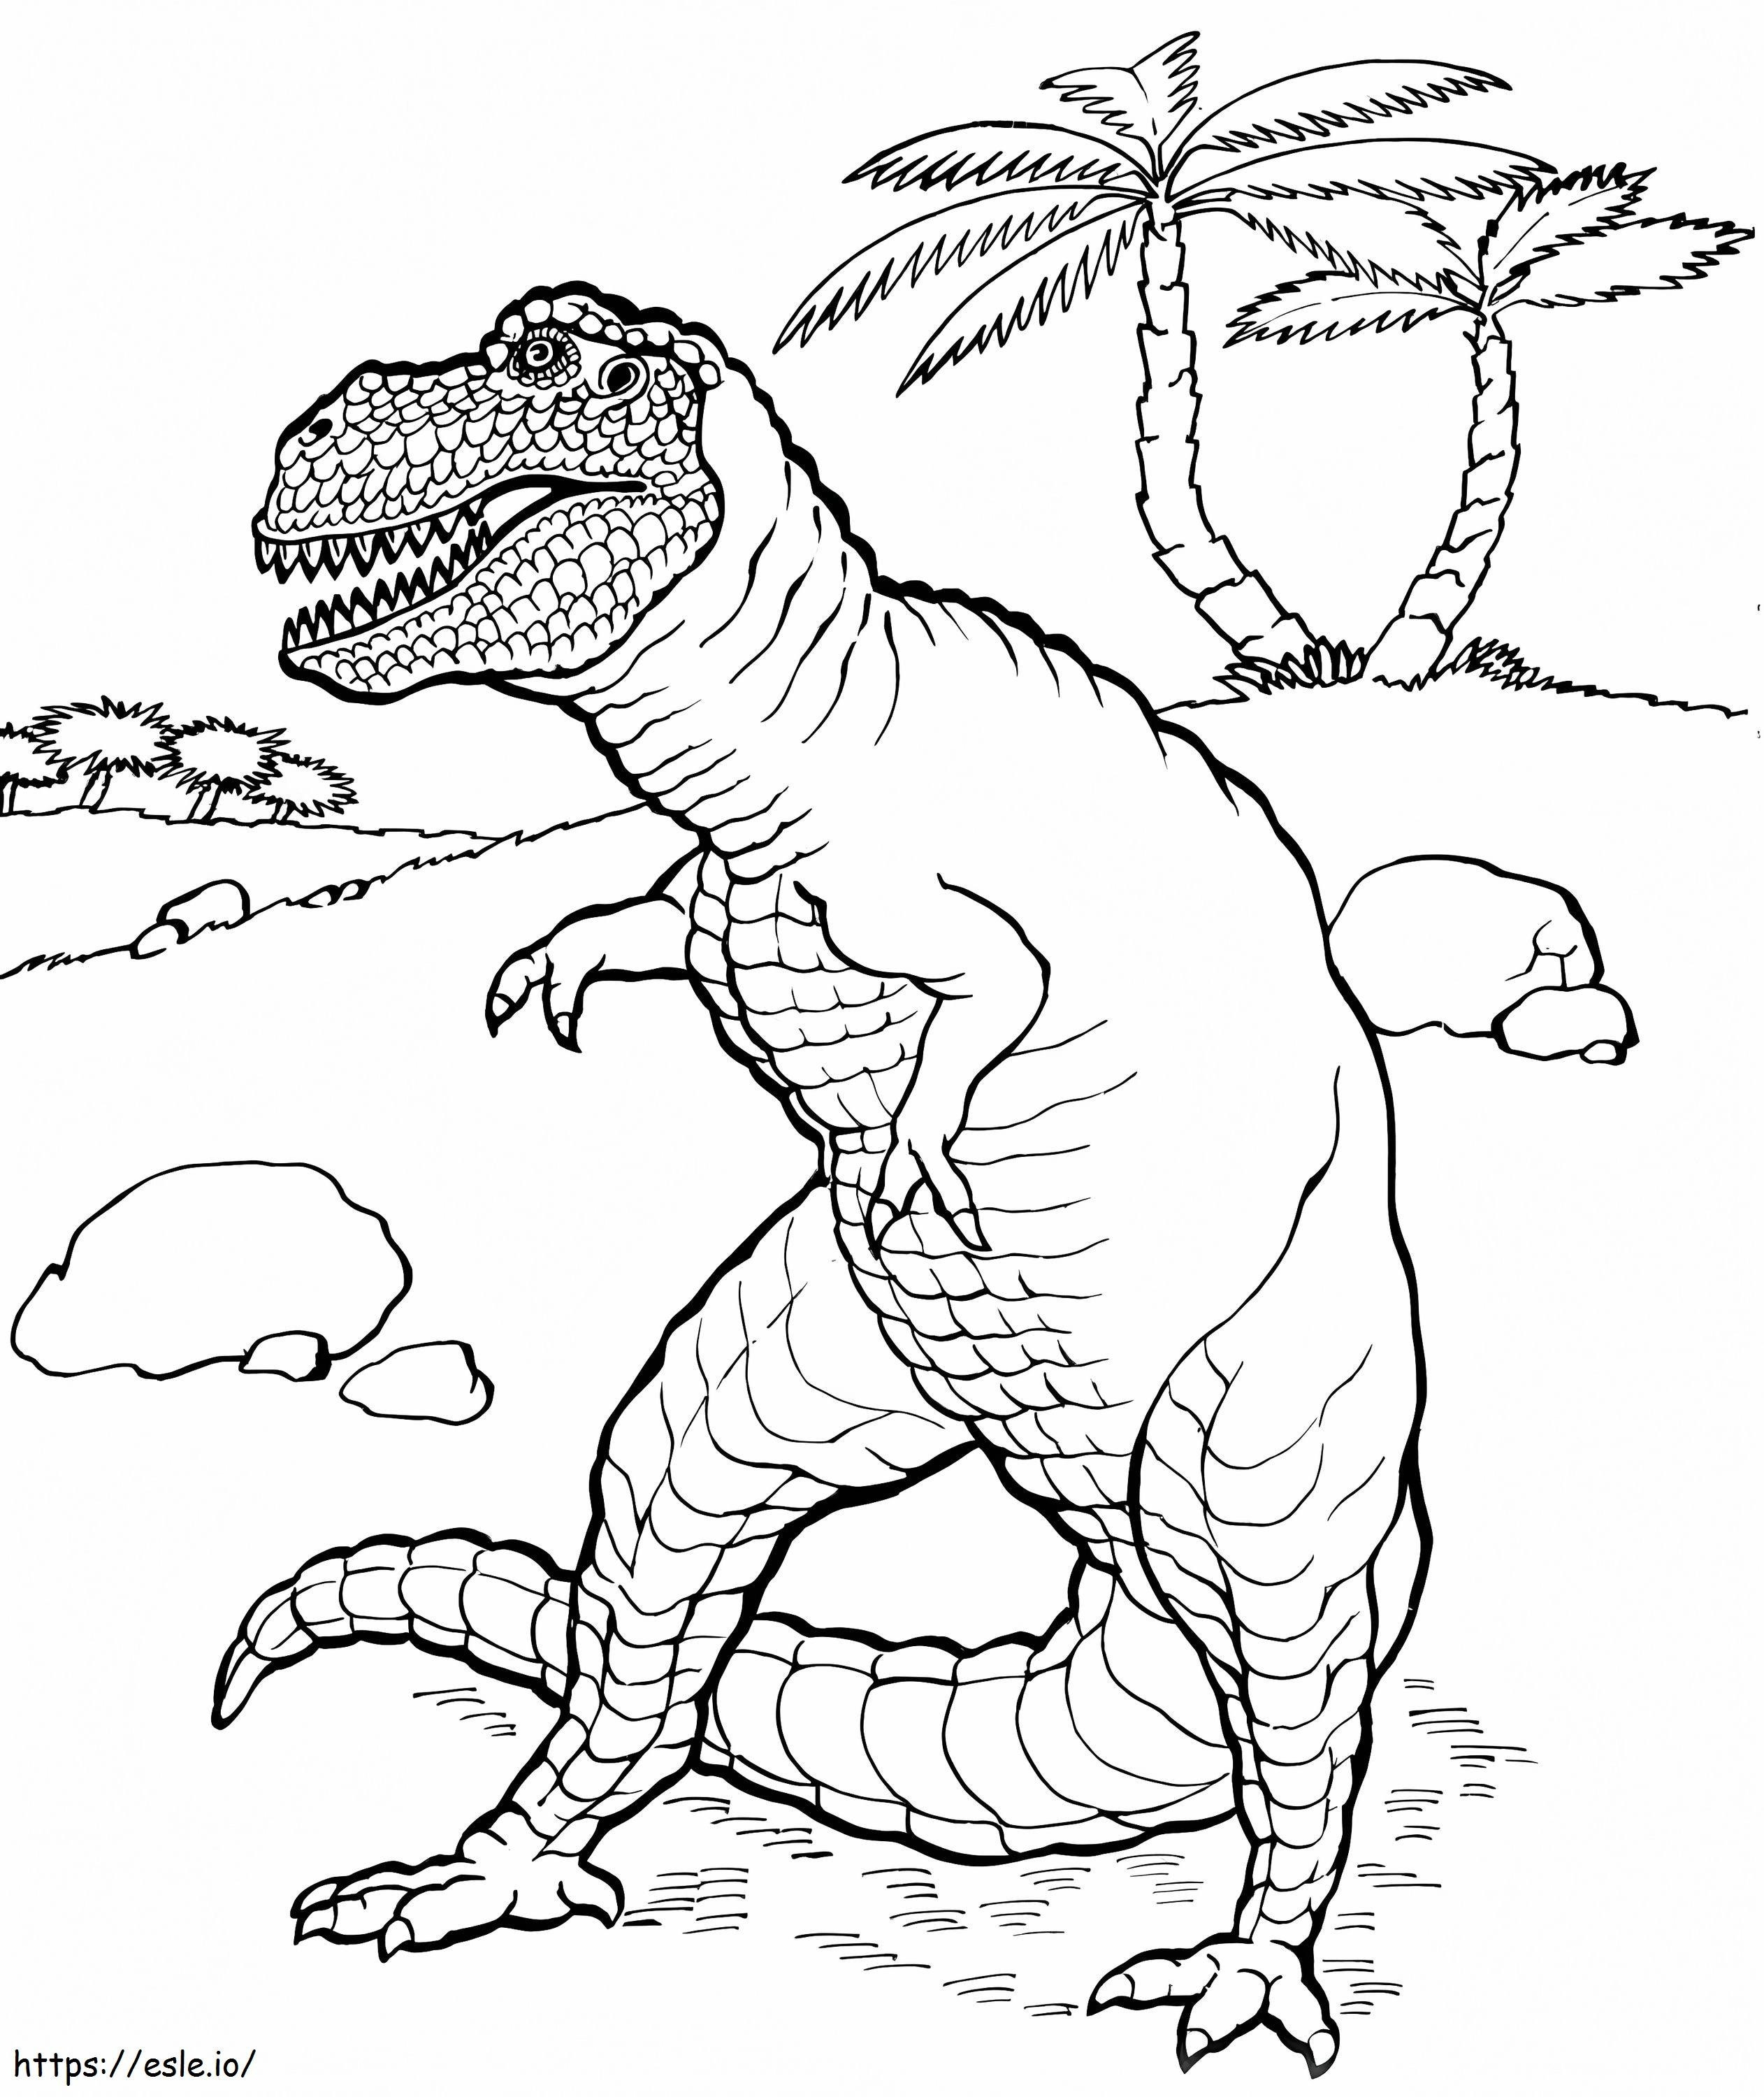 Tyranozaur Rex kolorowanka